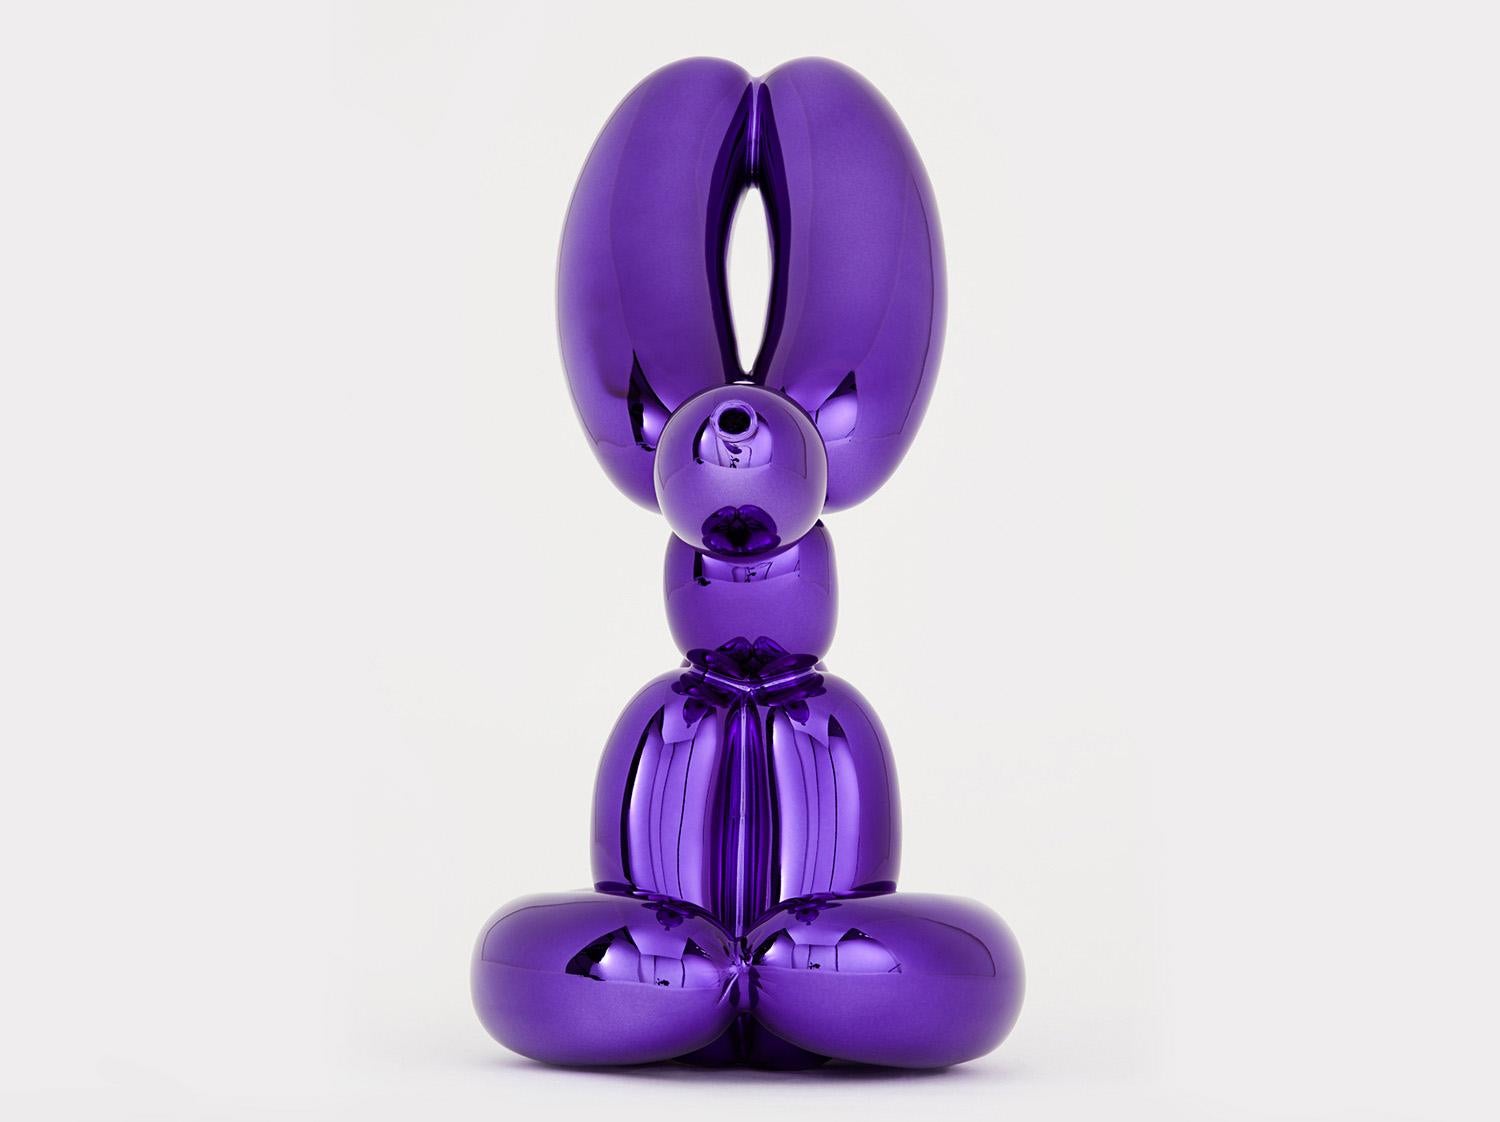 Balloon Rabbit (Violet) - Sculpture by Jeff Koons